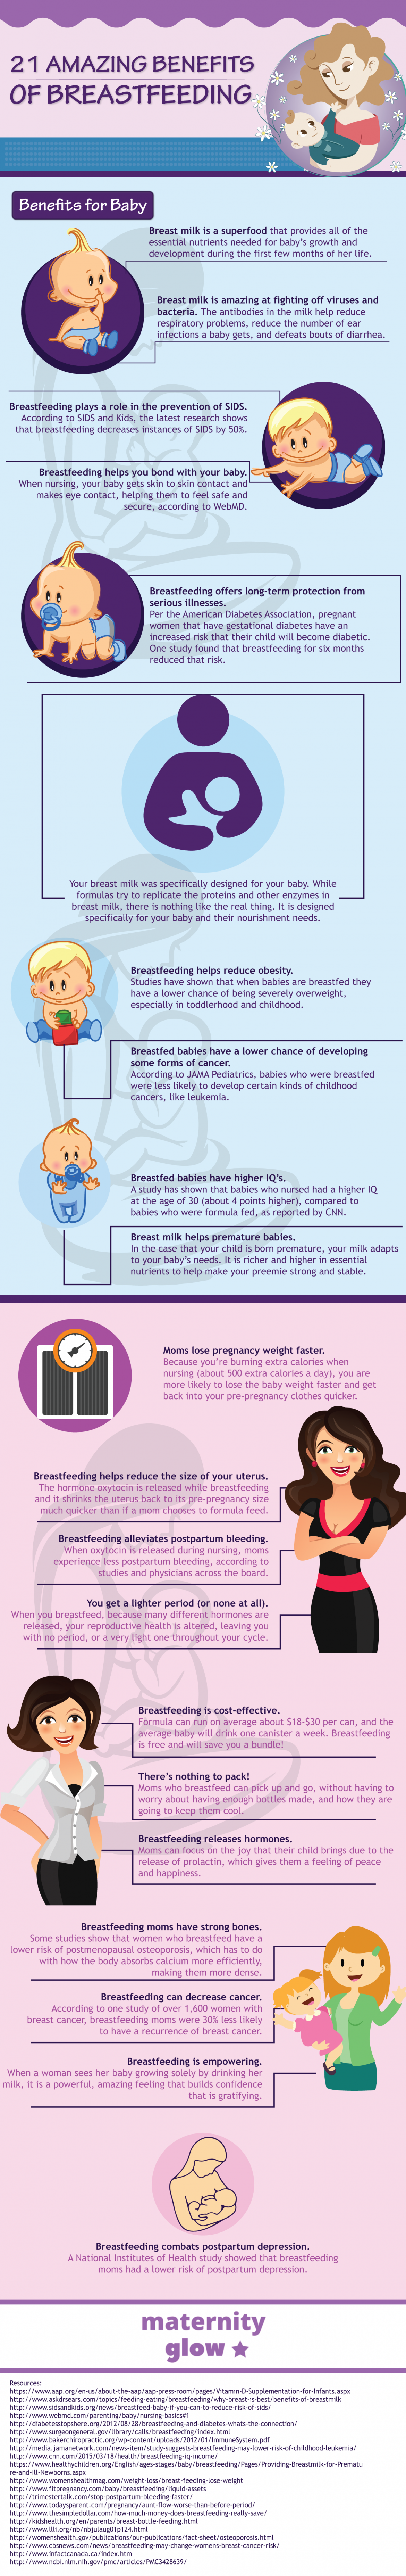 benefits-of-breastfeeding - My Health Maven